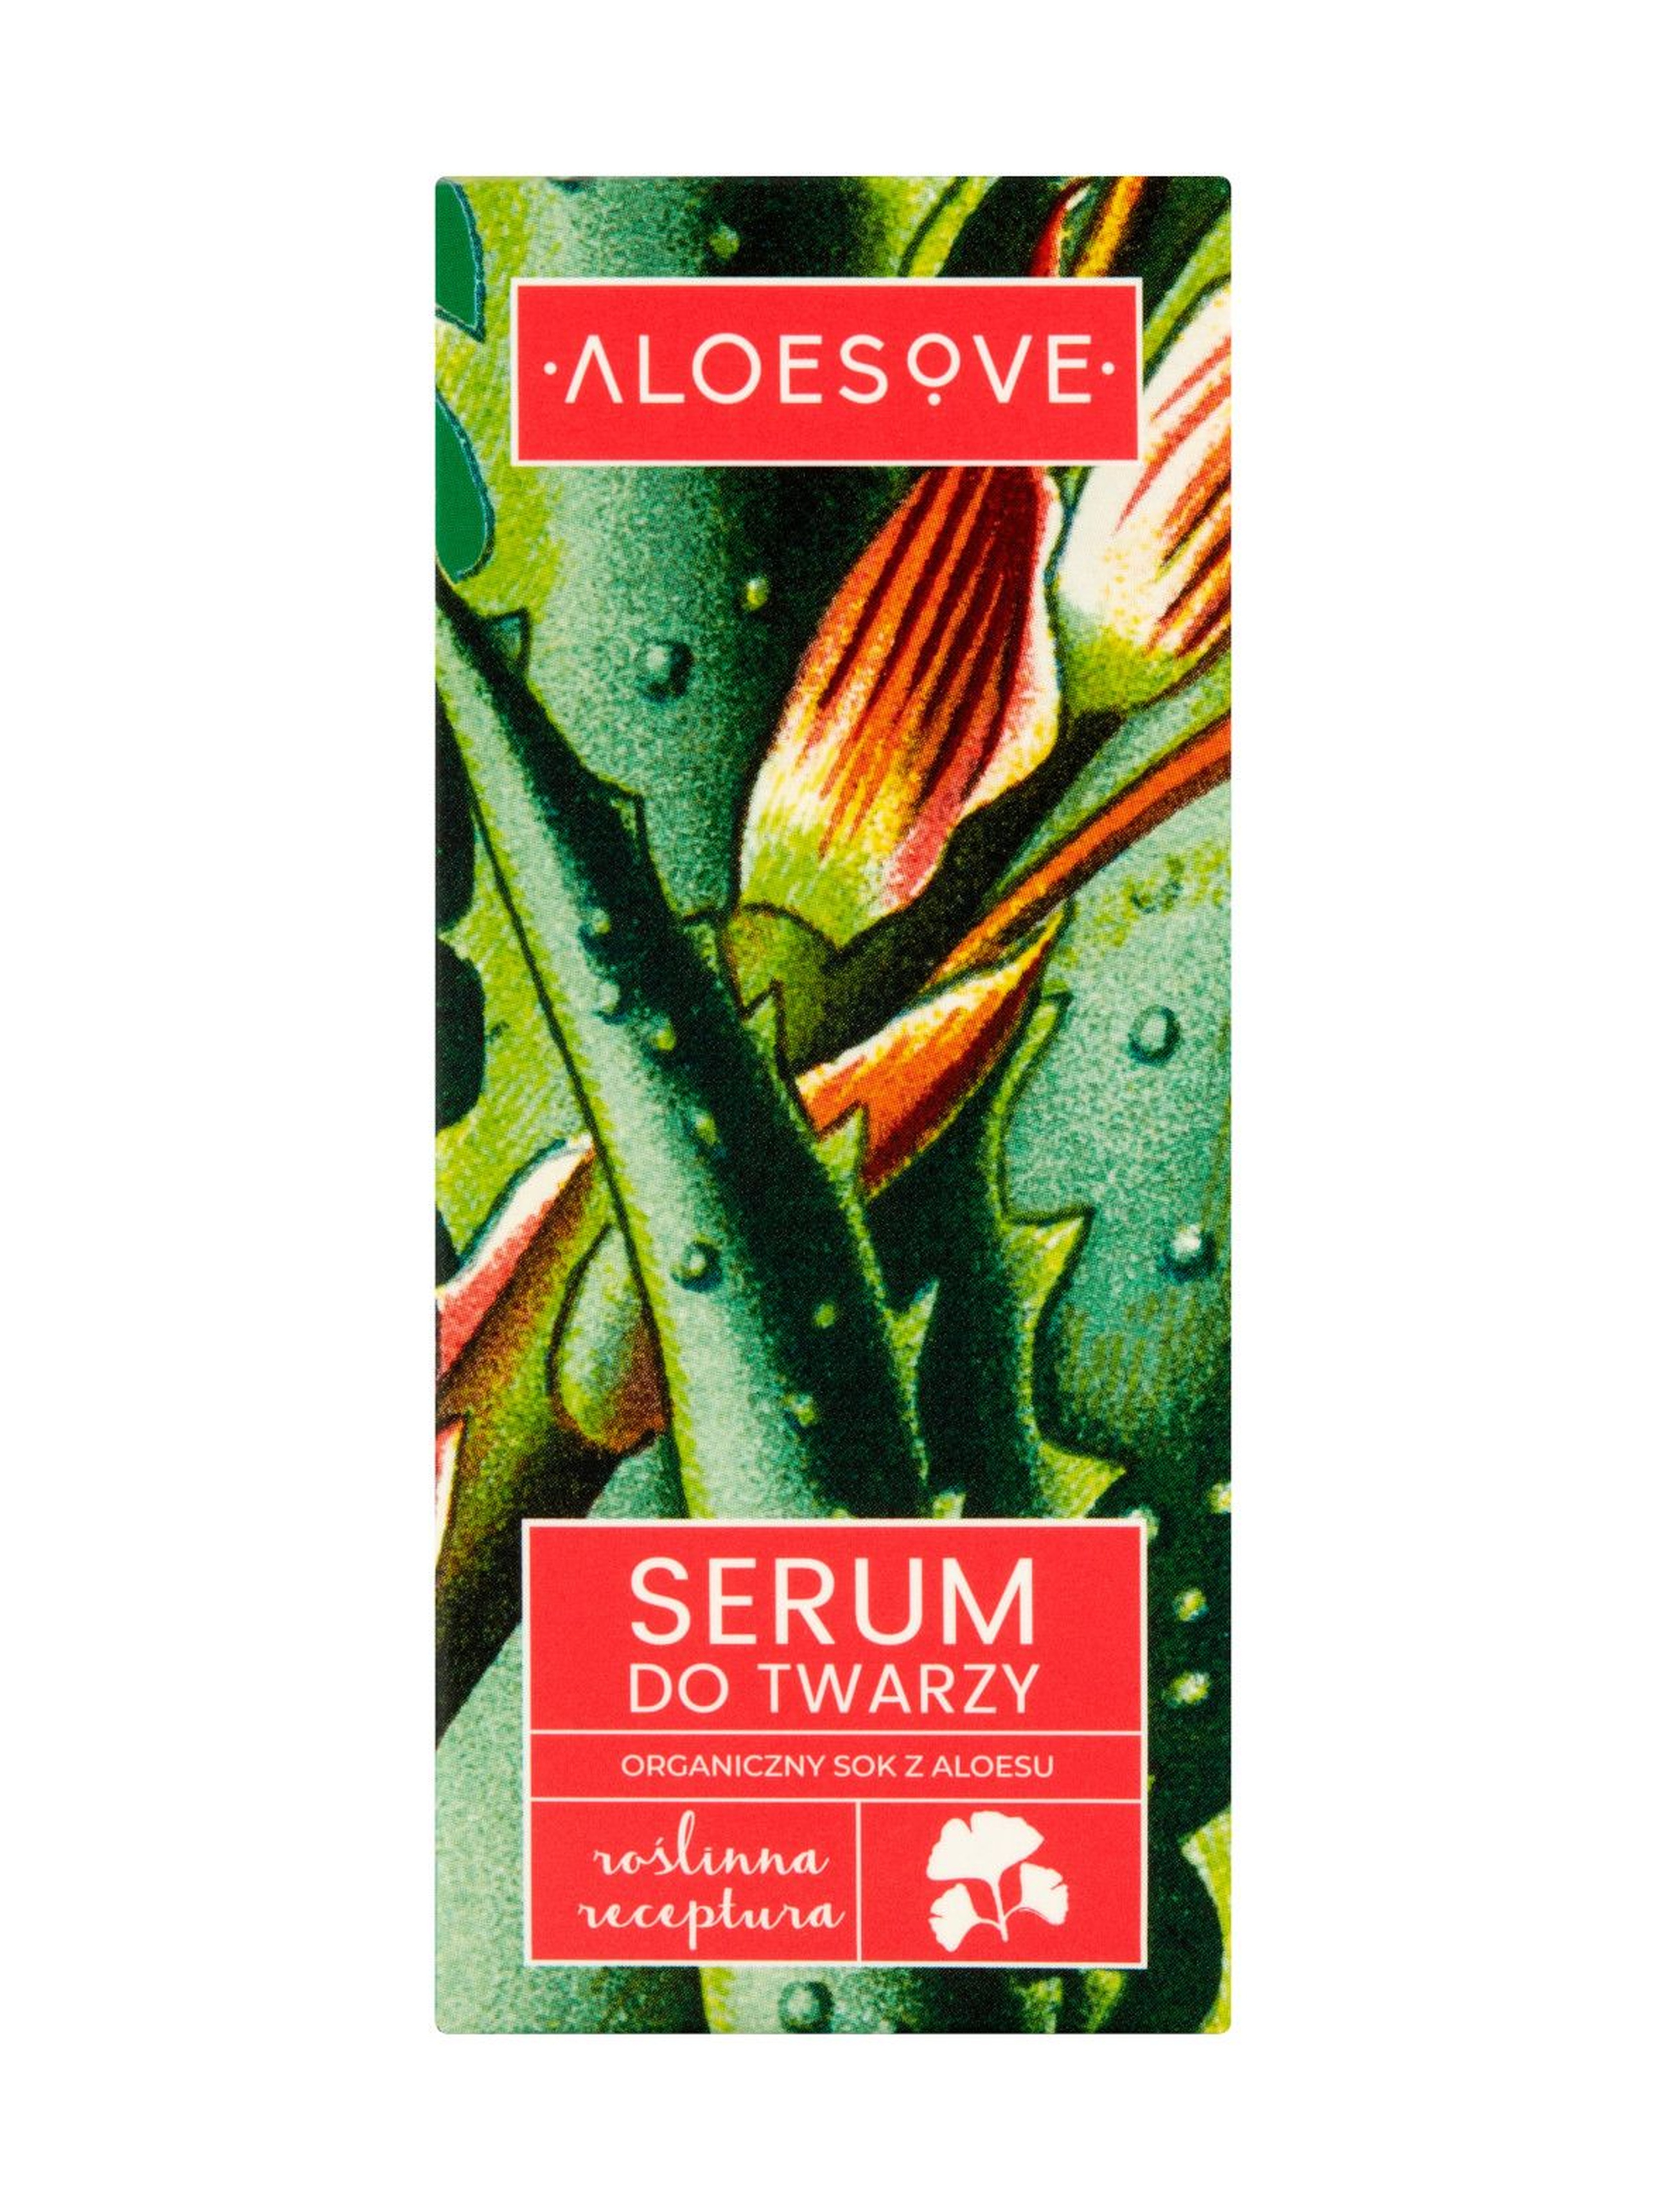 Serum do twarzy Aloesove  30 ml